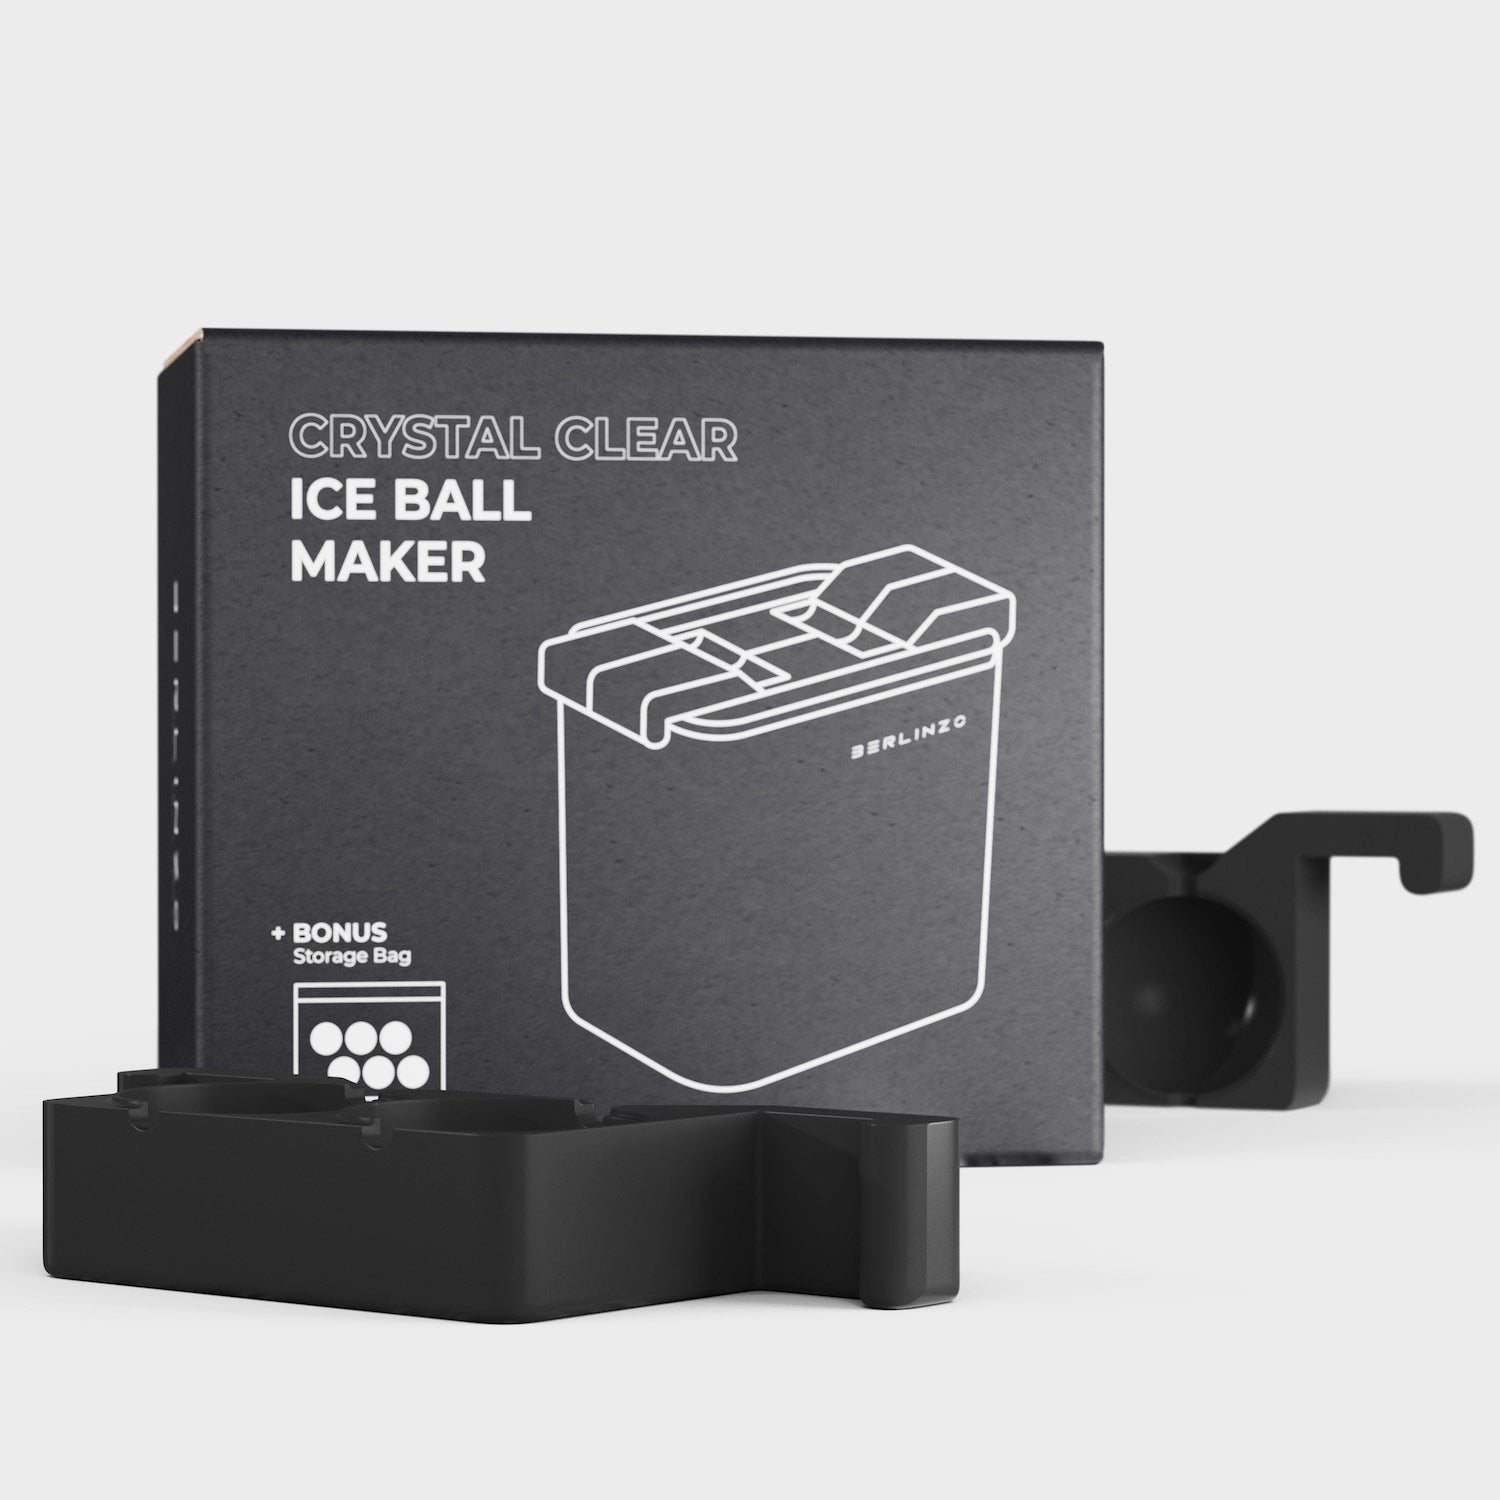 BERLINZO Premium Clear Ice Ball Maker Mold - Whiskey Ice Ball Maker Large 2.4 inch - Crystal Clear Ice Maker Sphere - Sphere Ice Mold Maker with Storage Bag